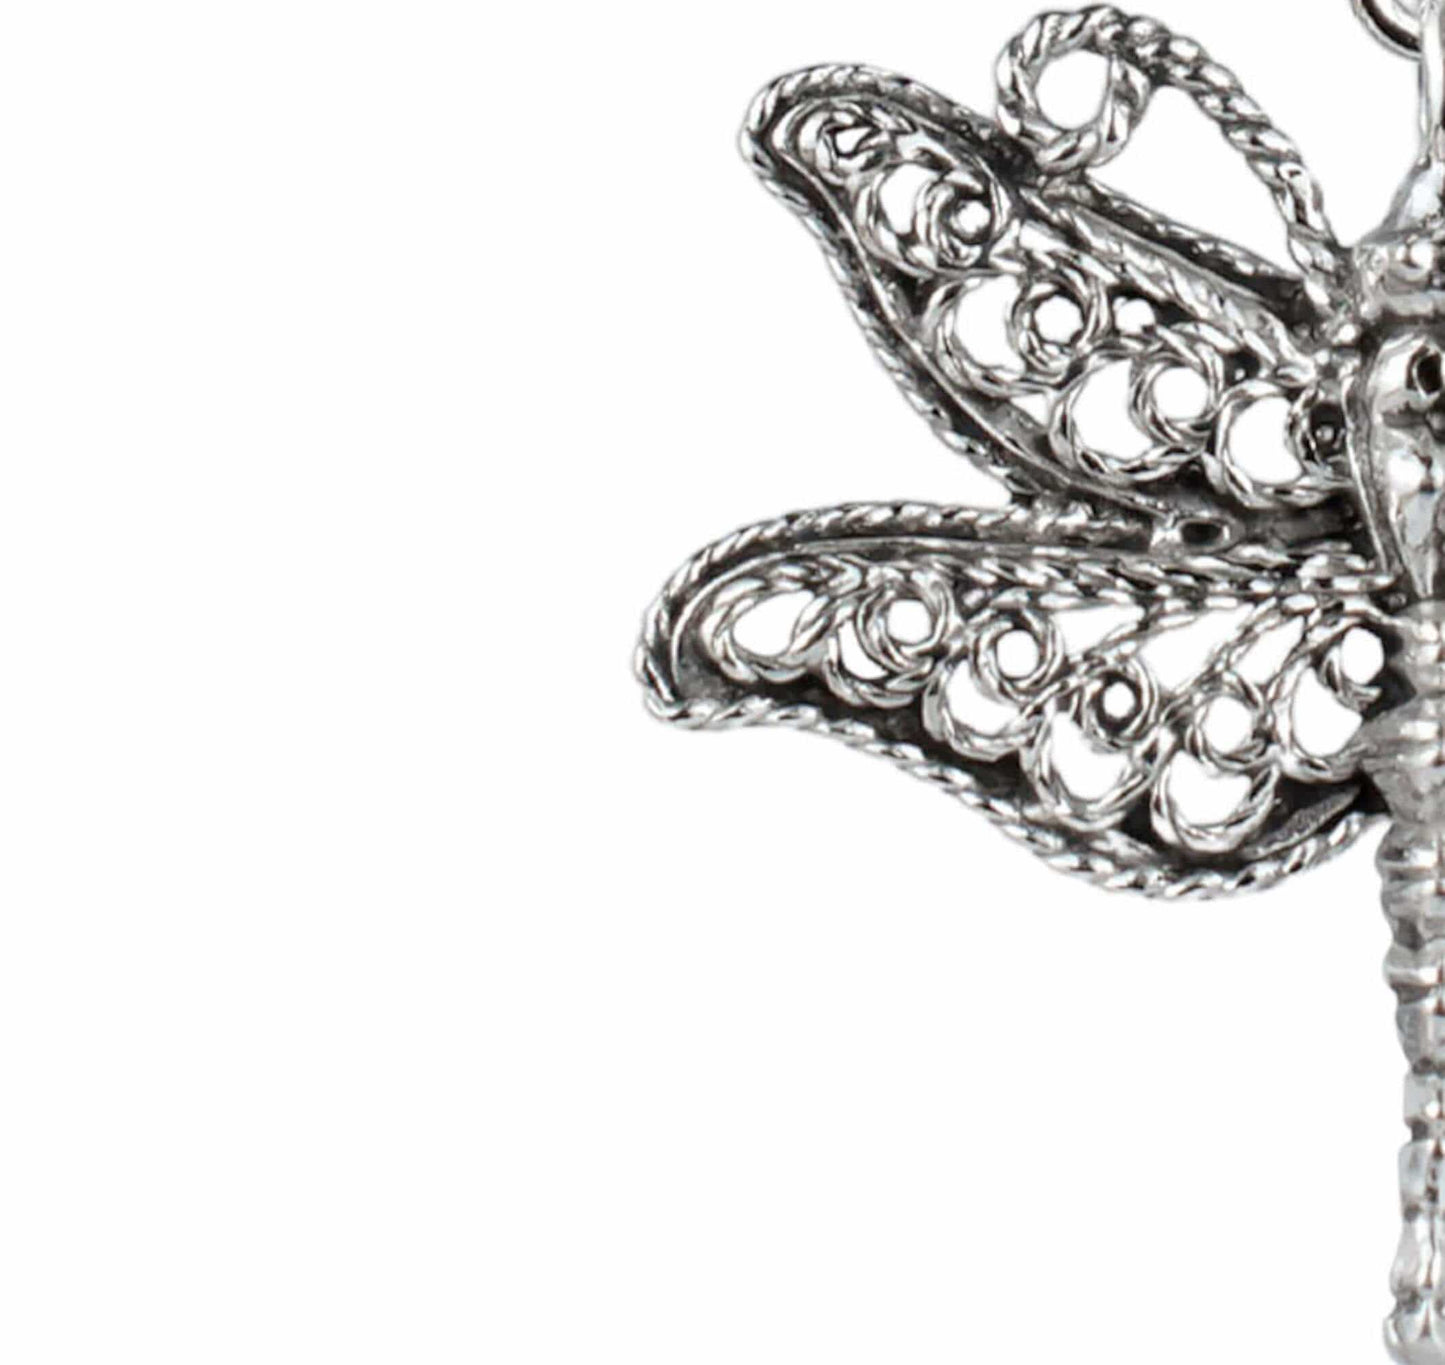 Filigree Art Dragonfly Design Women Silver Pendant Necklace